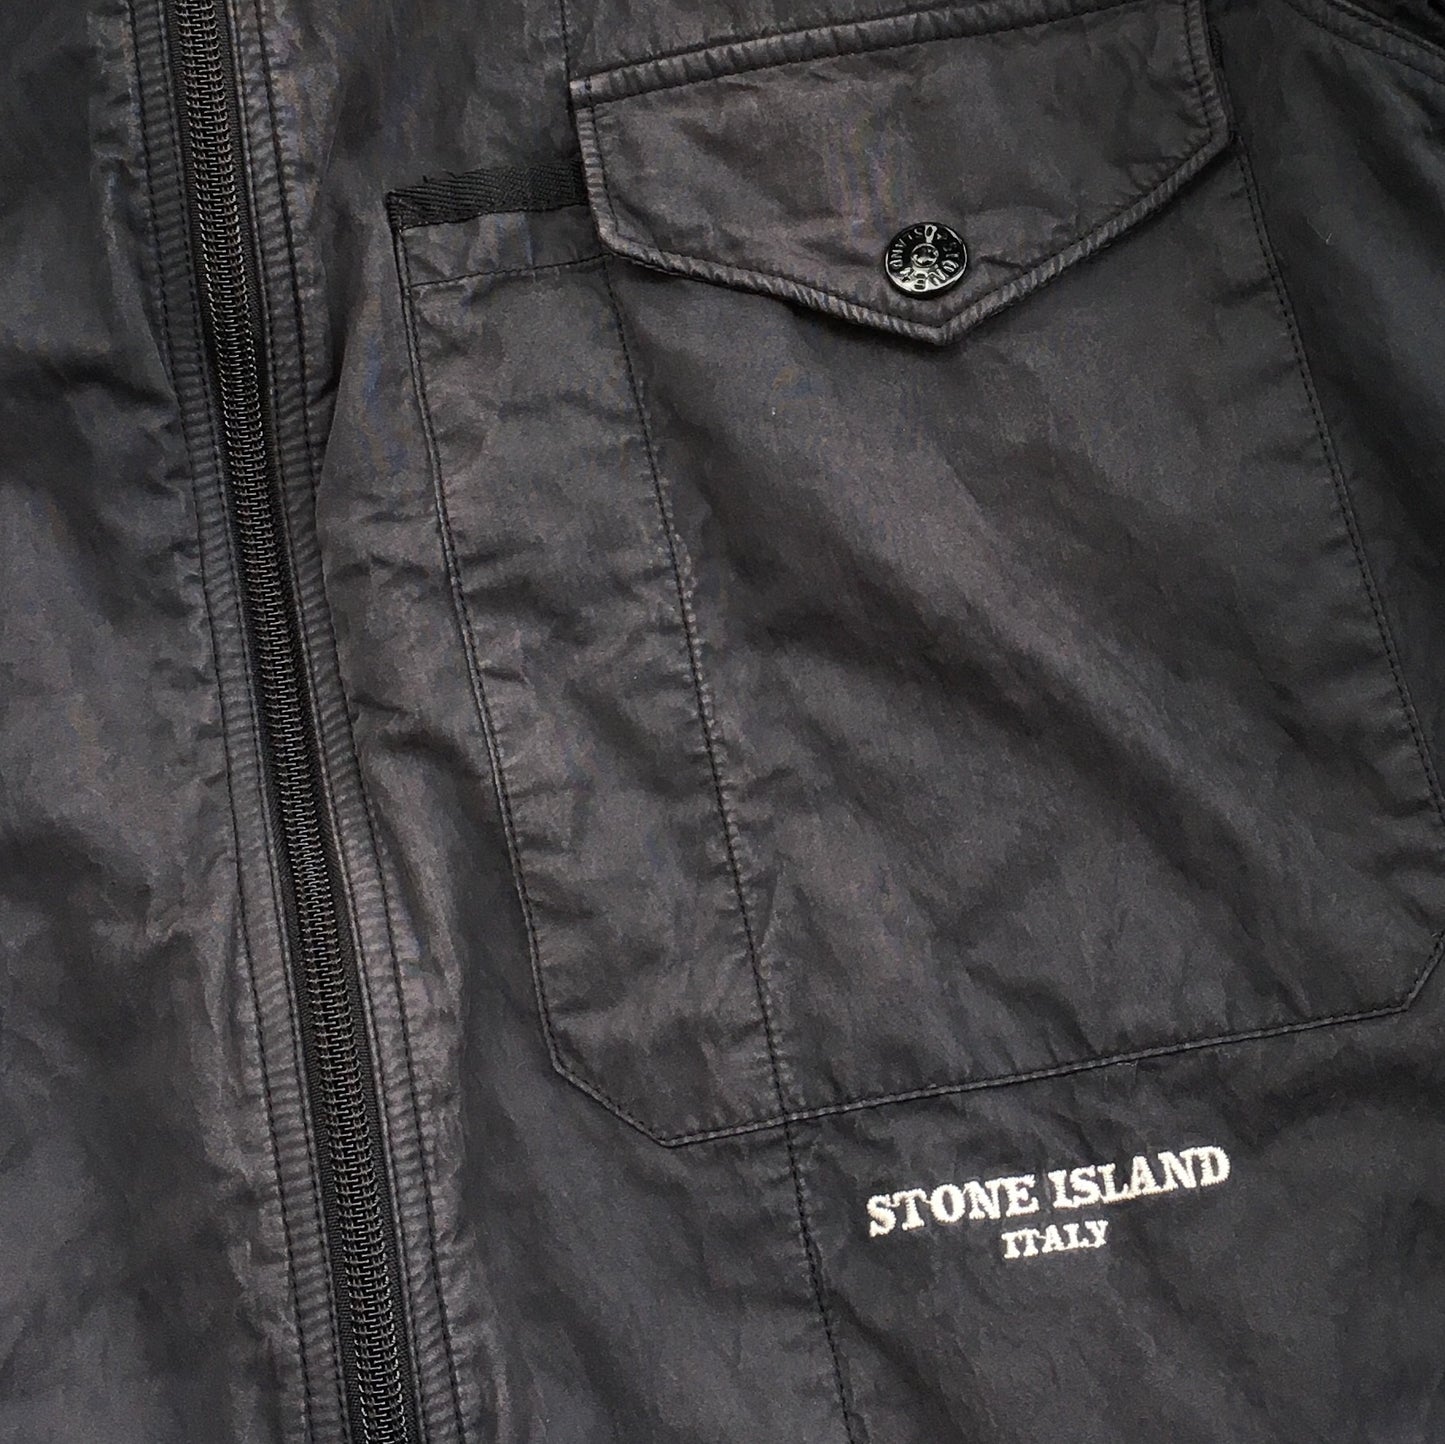 Stone Island AW 2005 Cotton Nylon Garment Dyed Overshirt - XS/S